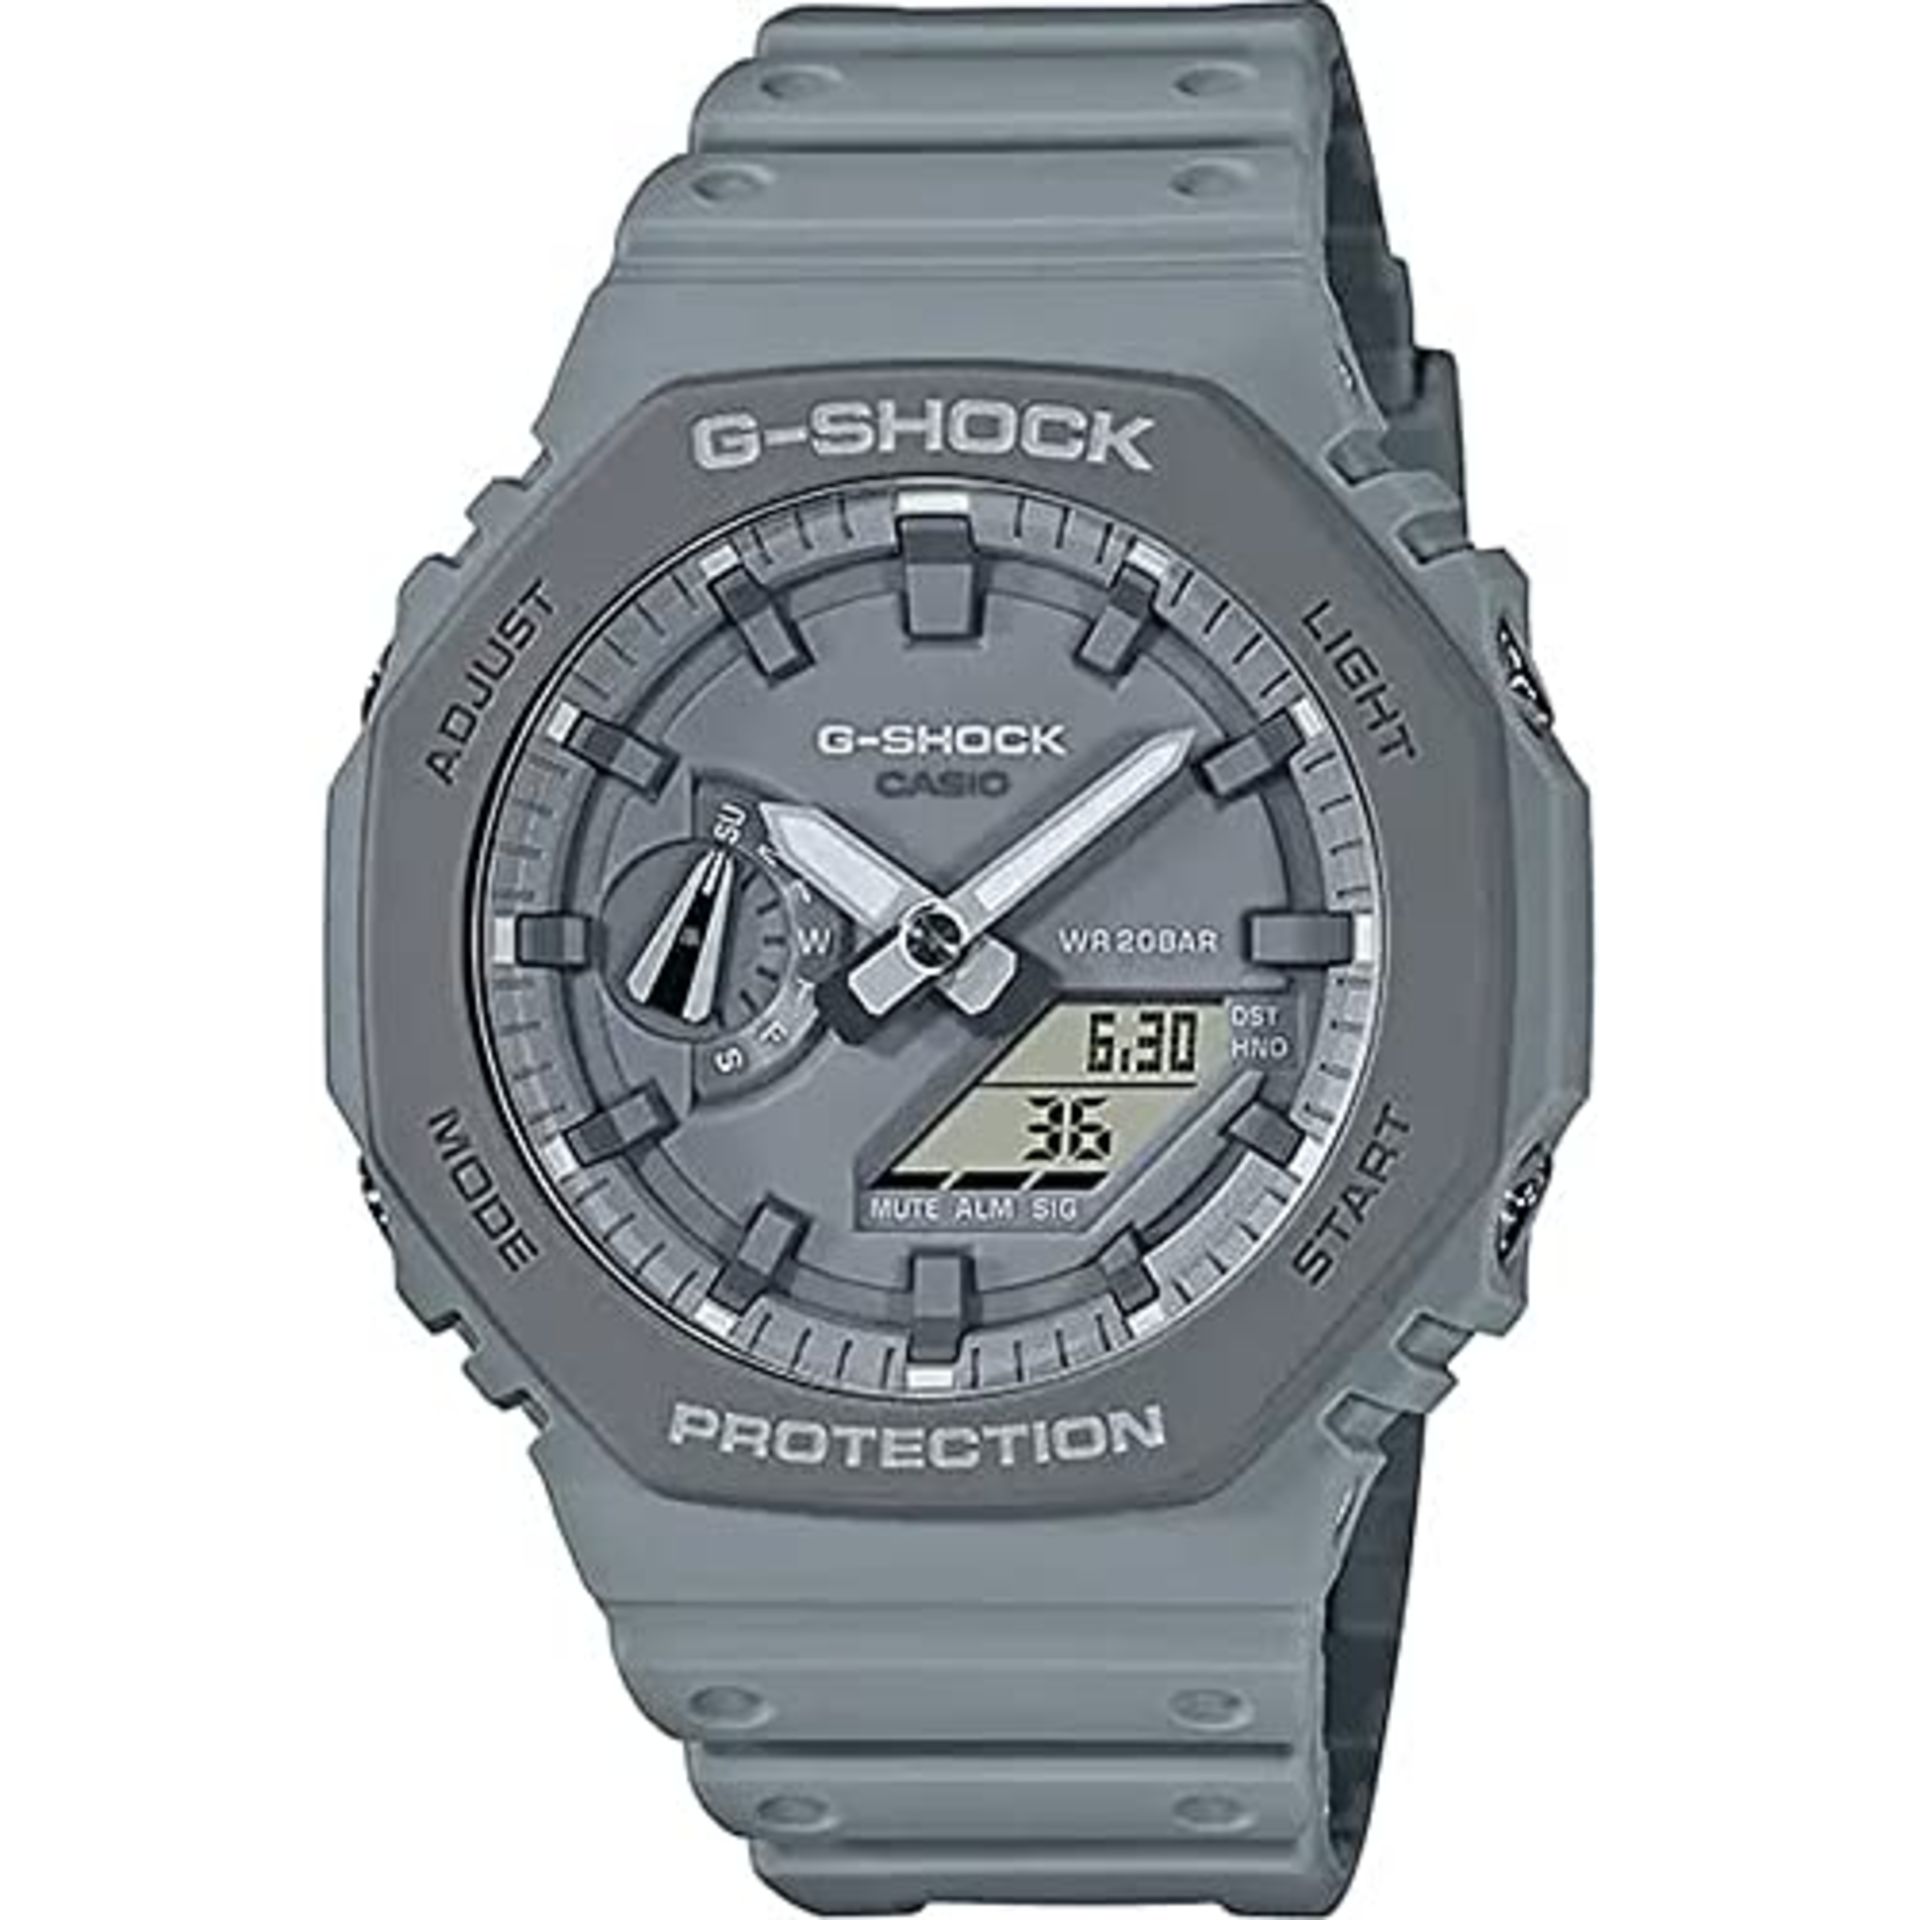 RRP £94.00 Casio Sport Watch GA-2110ET-8AER